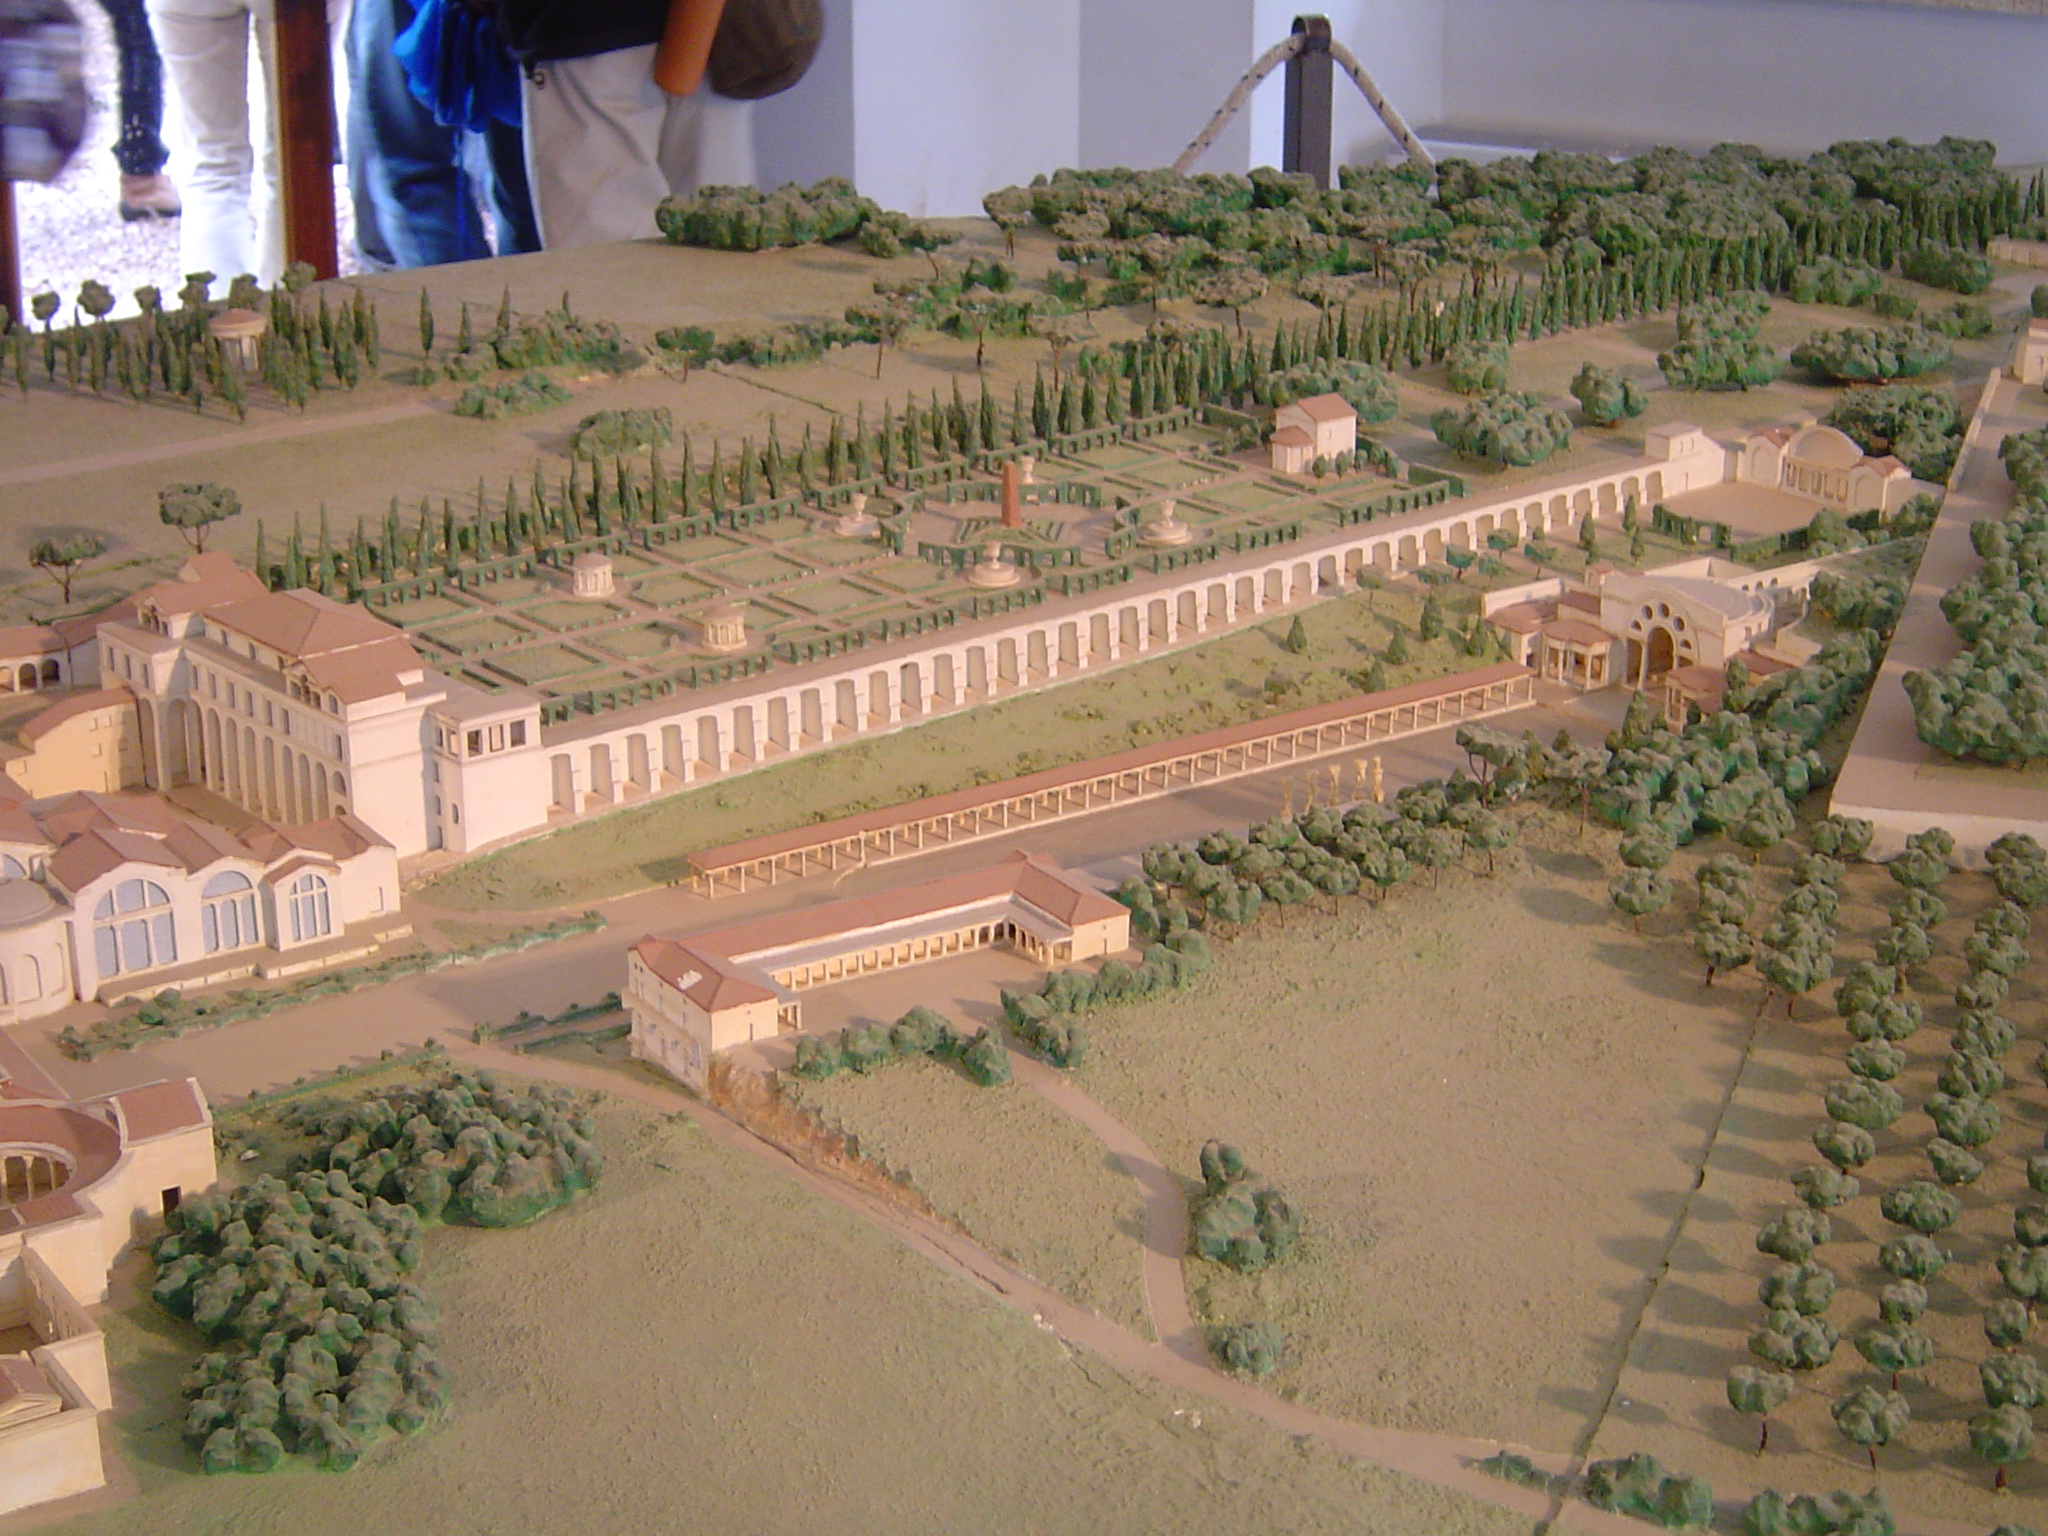 Image of hadrian's villa from model